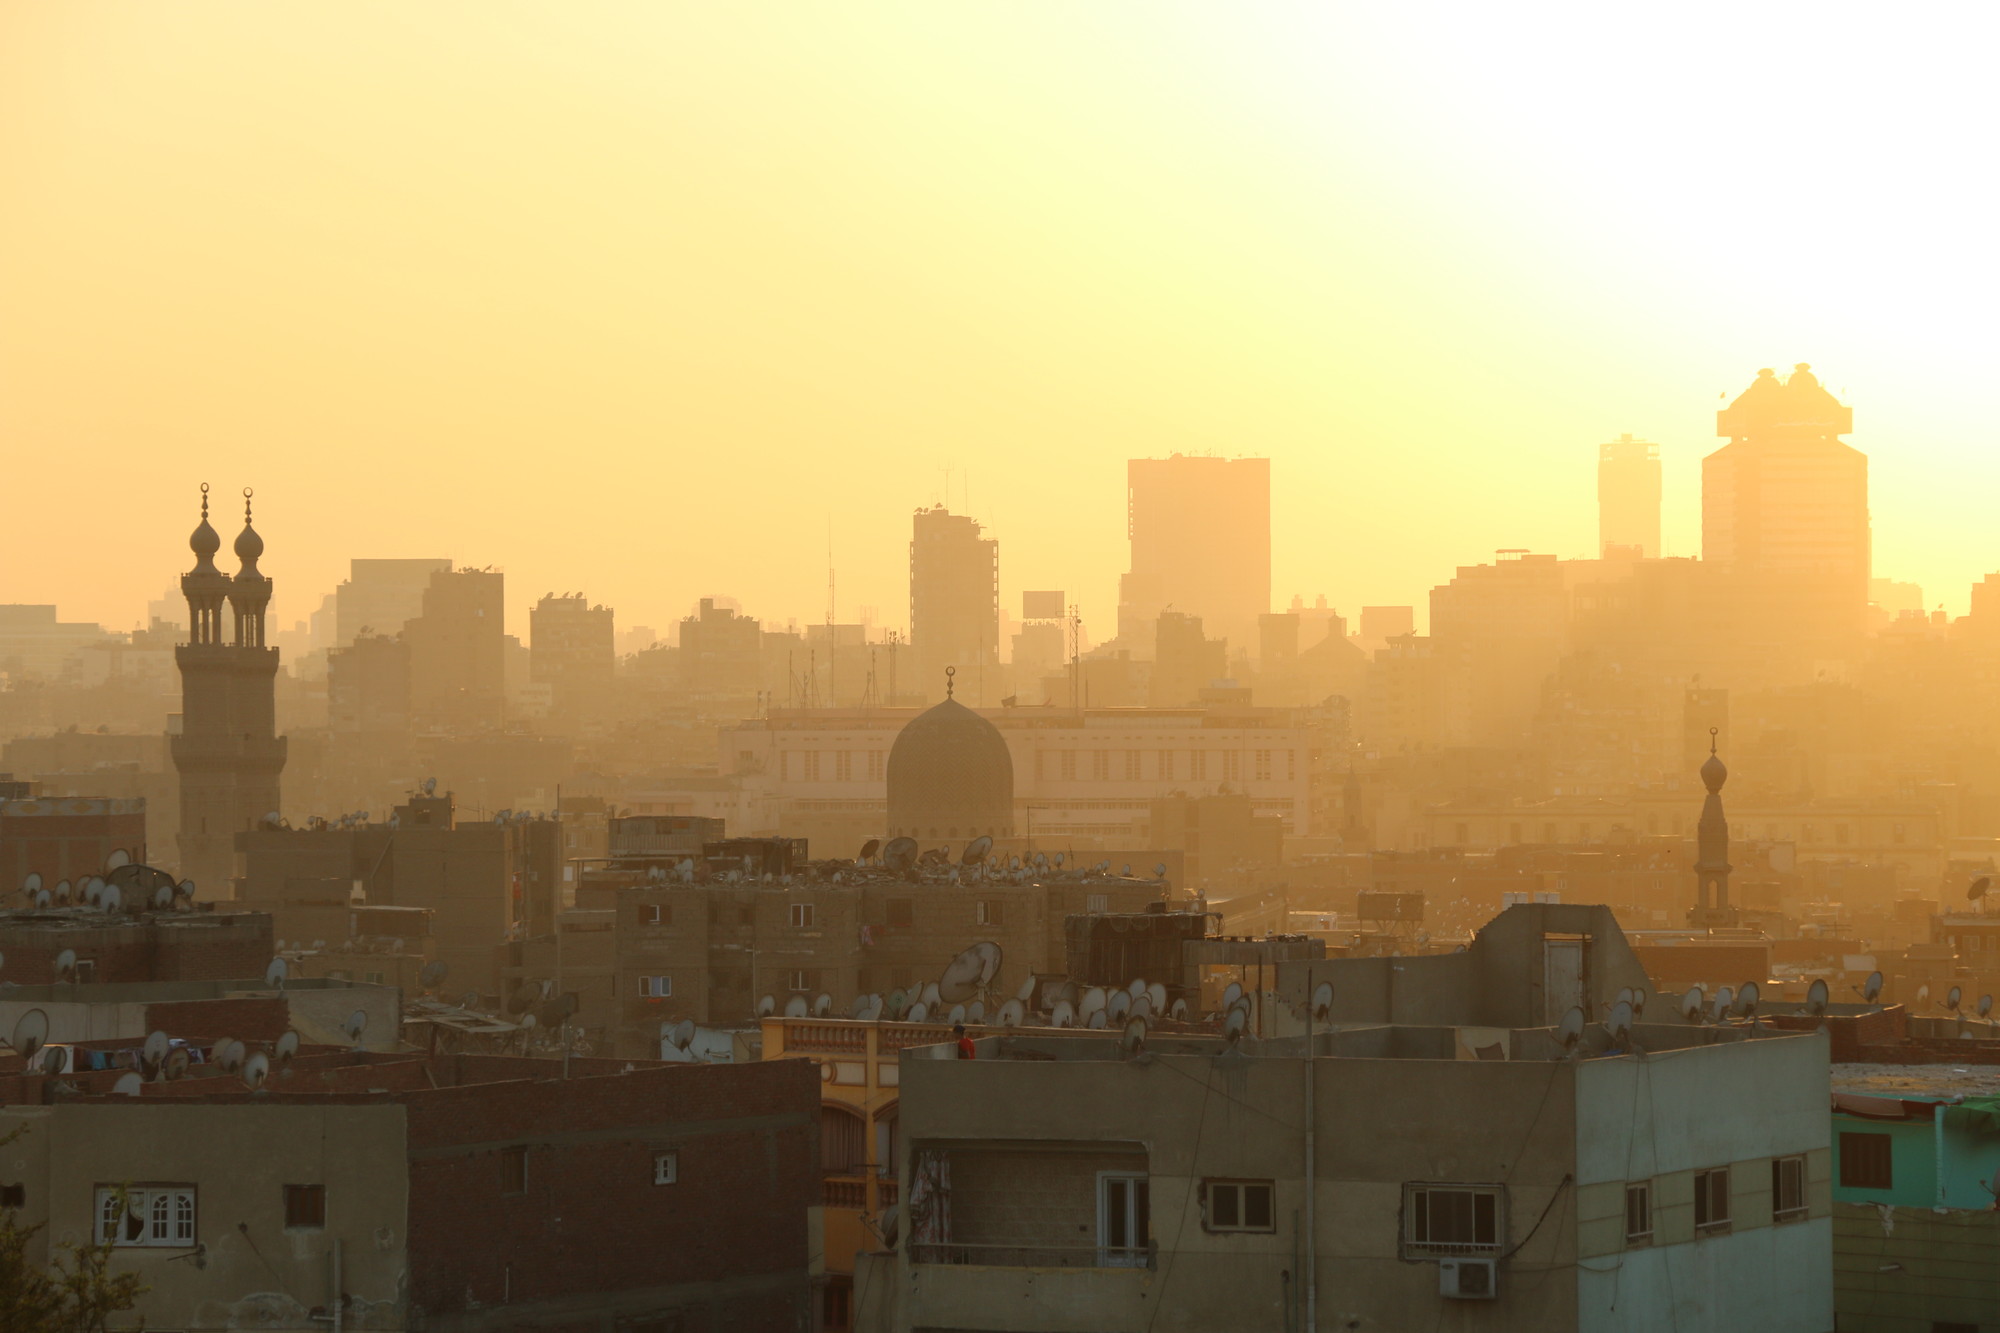 The Cairo skyline at sunset